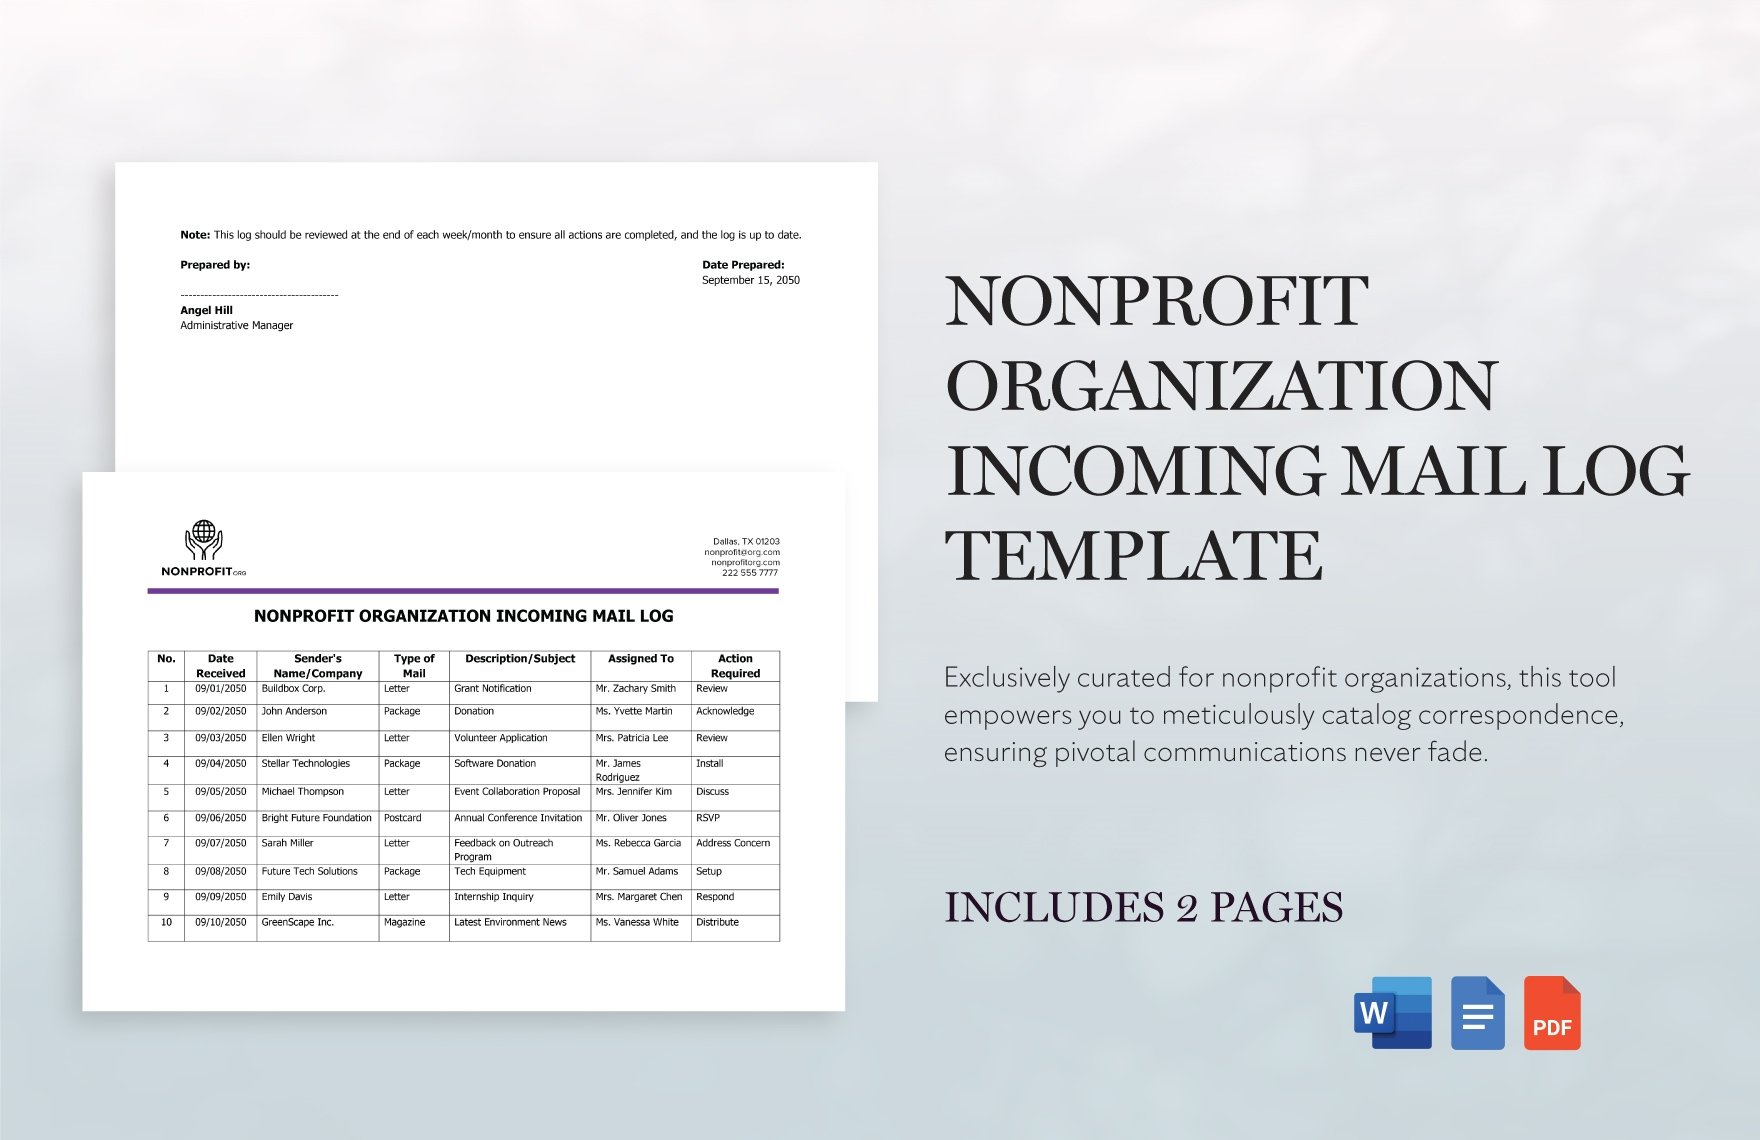 Nonprofit Organization Incoming Mail Log Template in Word, Google Docs, PDF